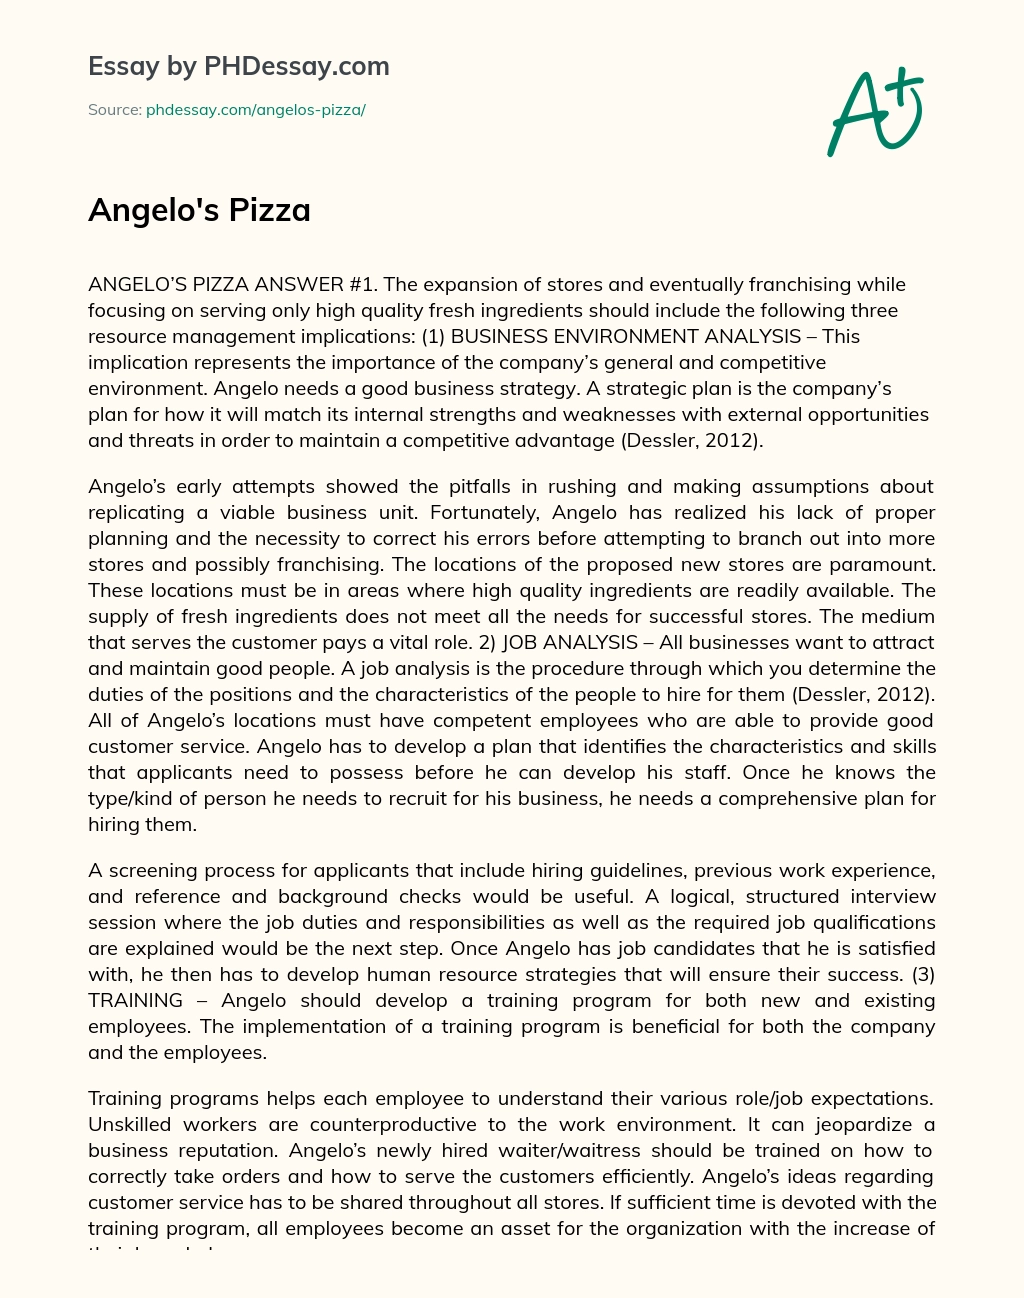 Angelo’s Pizza essay